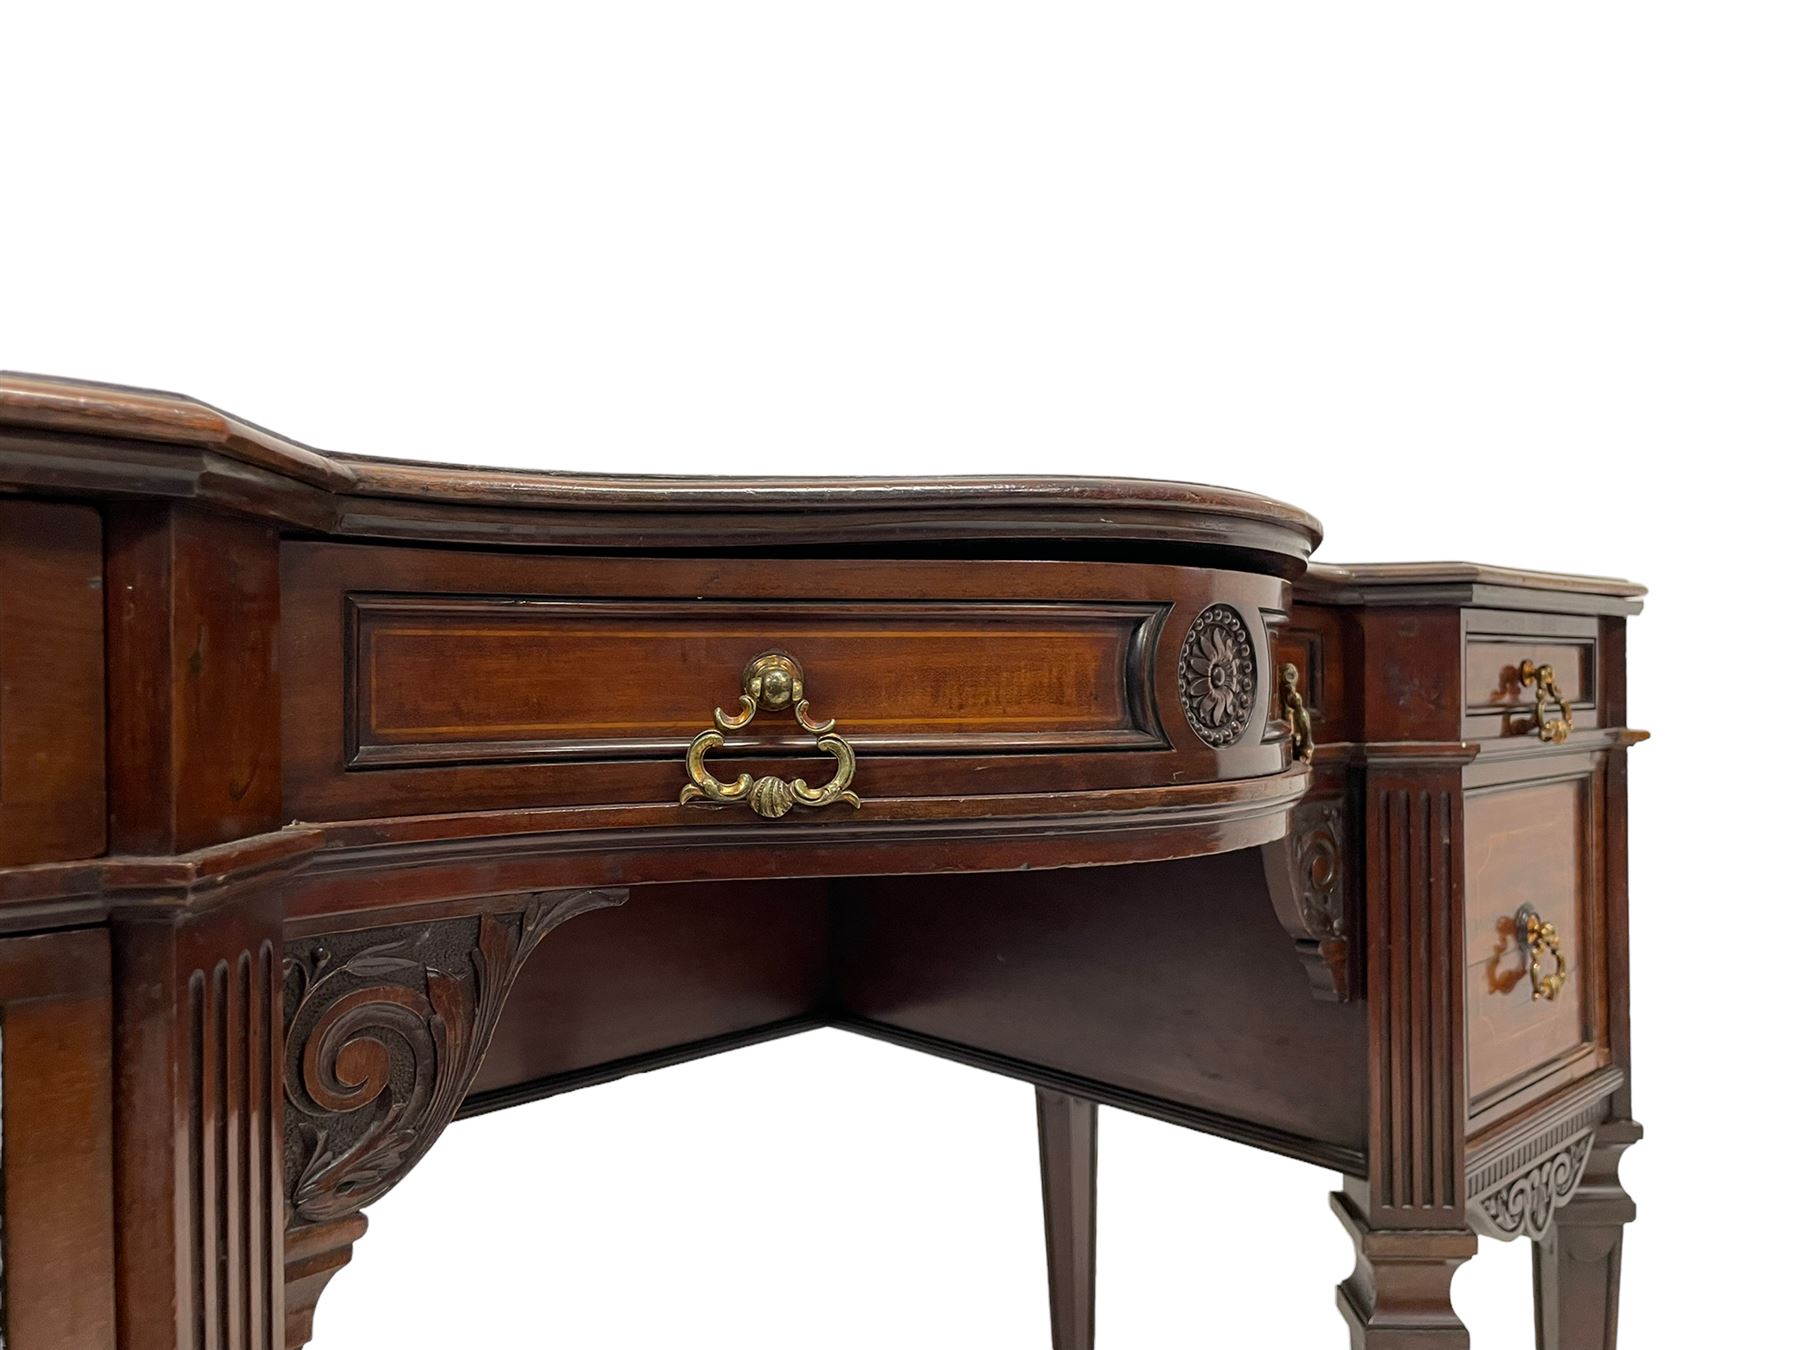 Late 19th century mahogany writing desk - Image 3 of 18